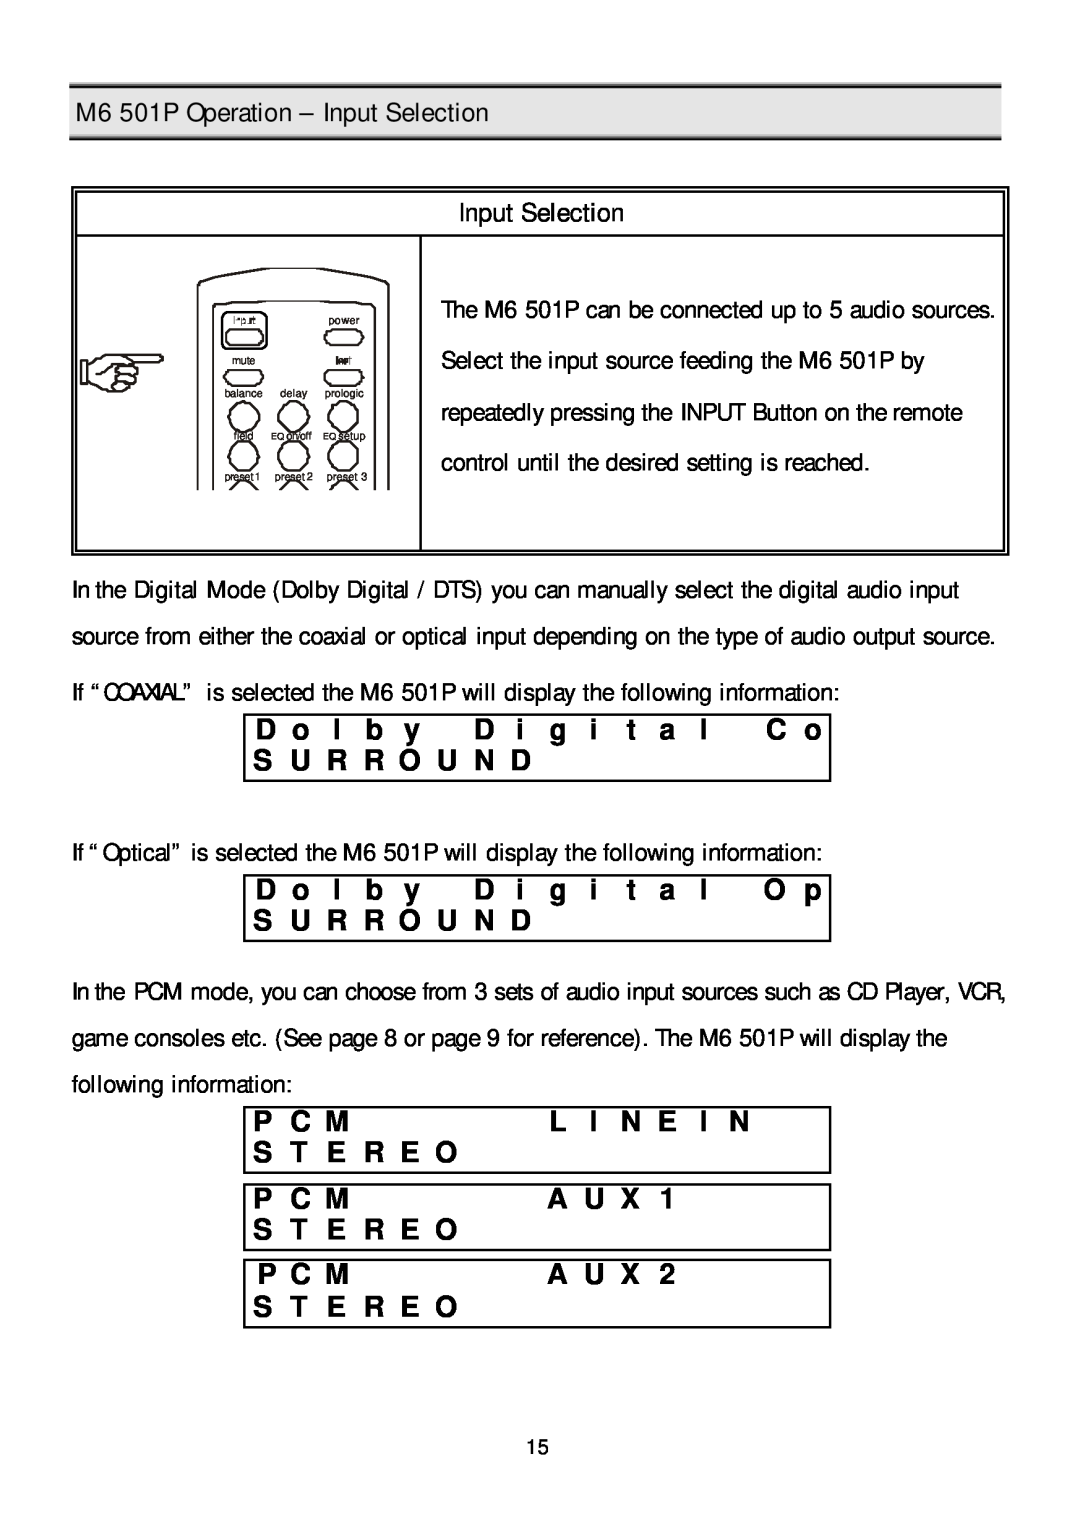 Klegg electronic manual M6 501P Operation - Input Selection 